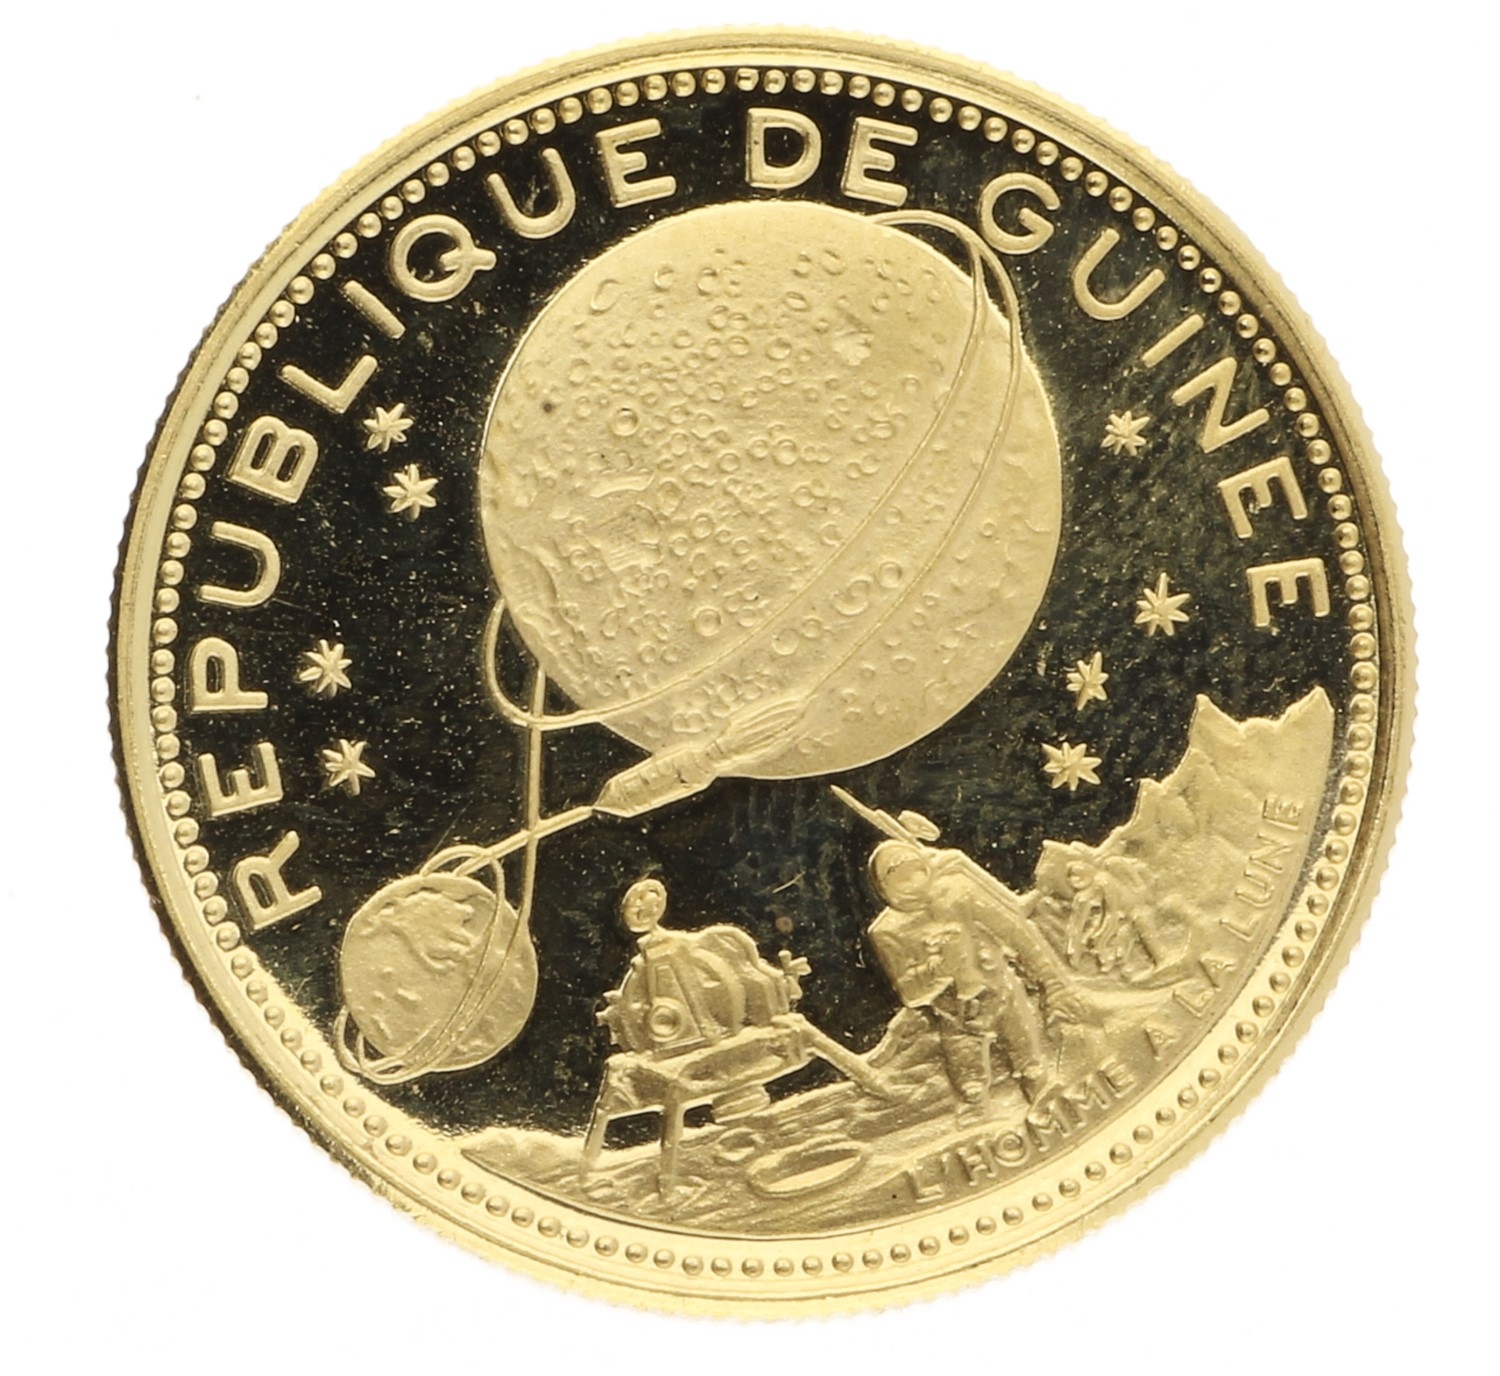 2000 Francs - Guinea - 1969